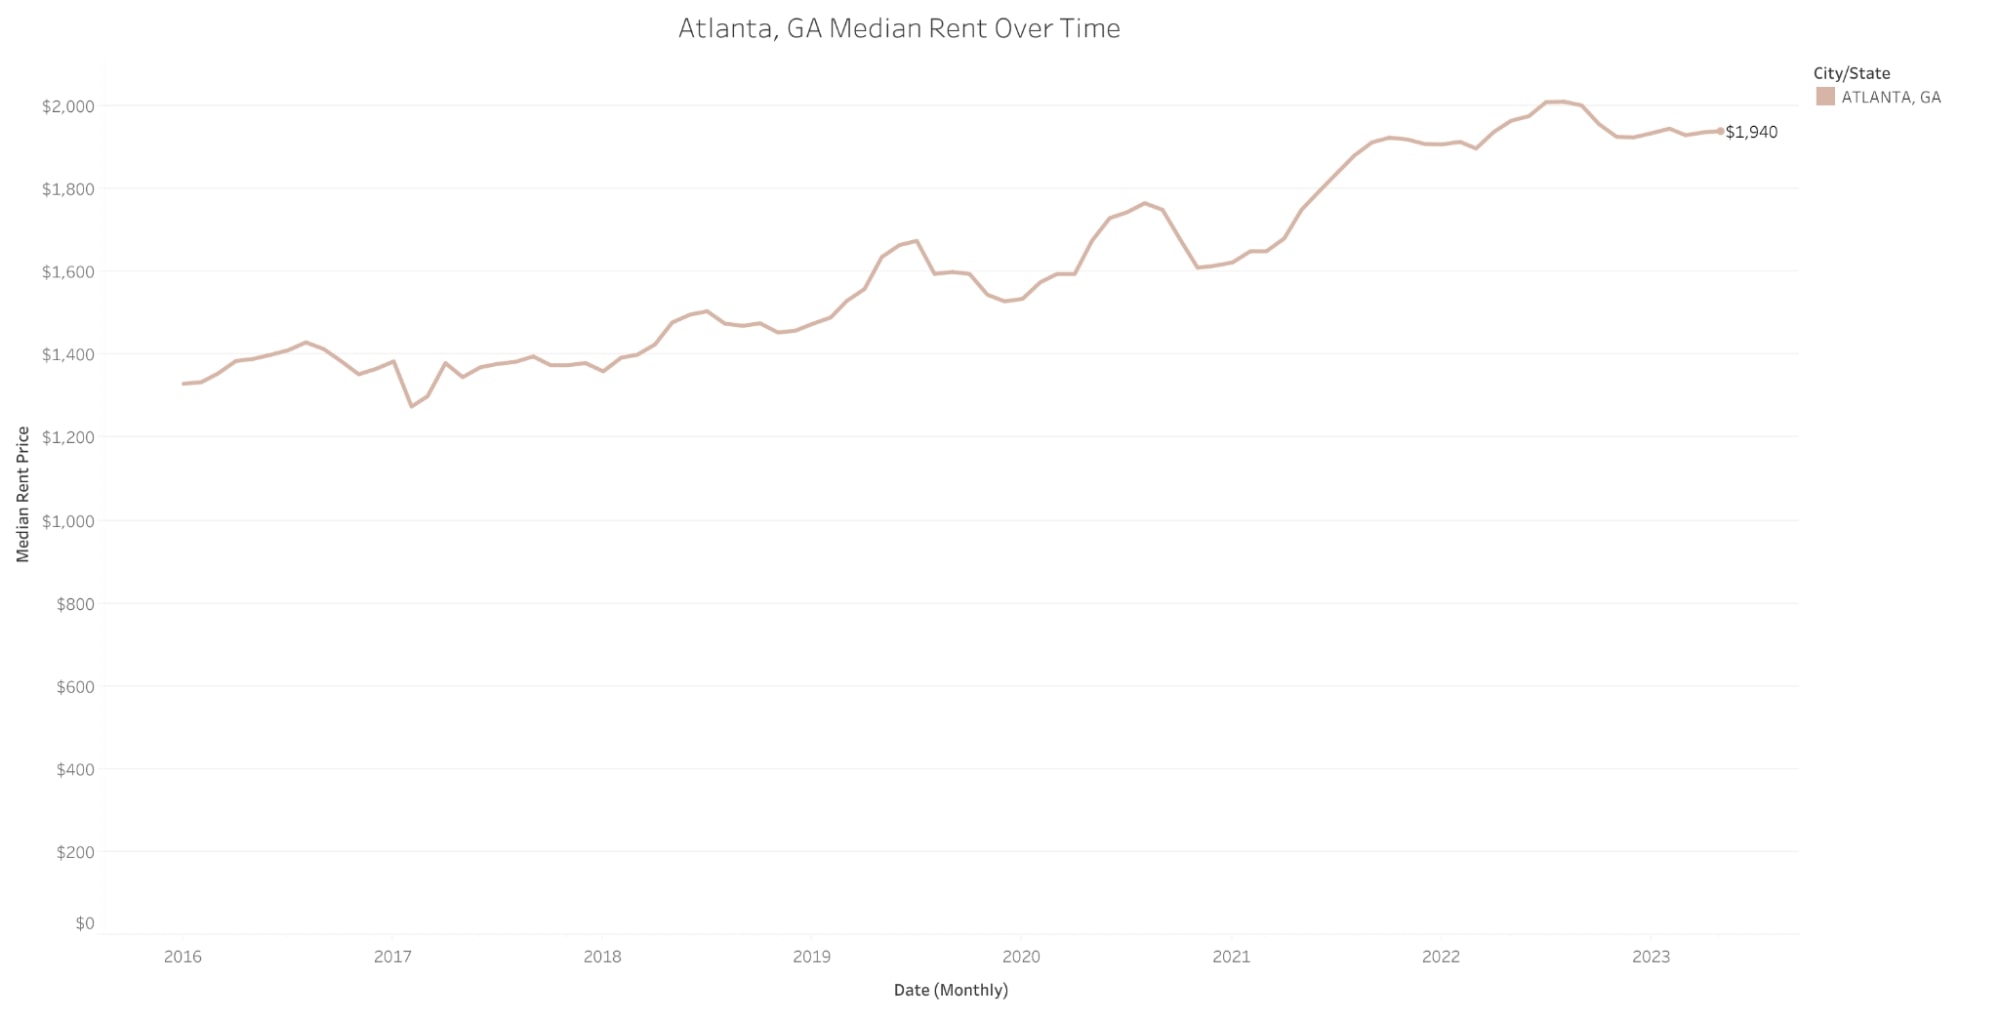 Median Rent Over Time in Atlanta (2016-2023)